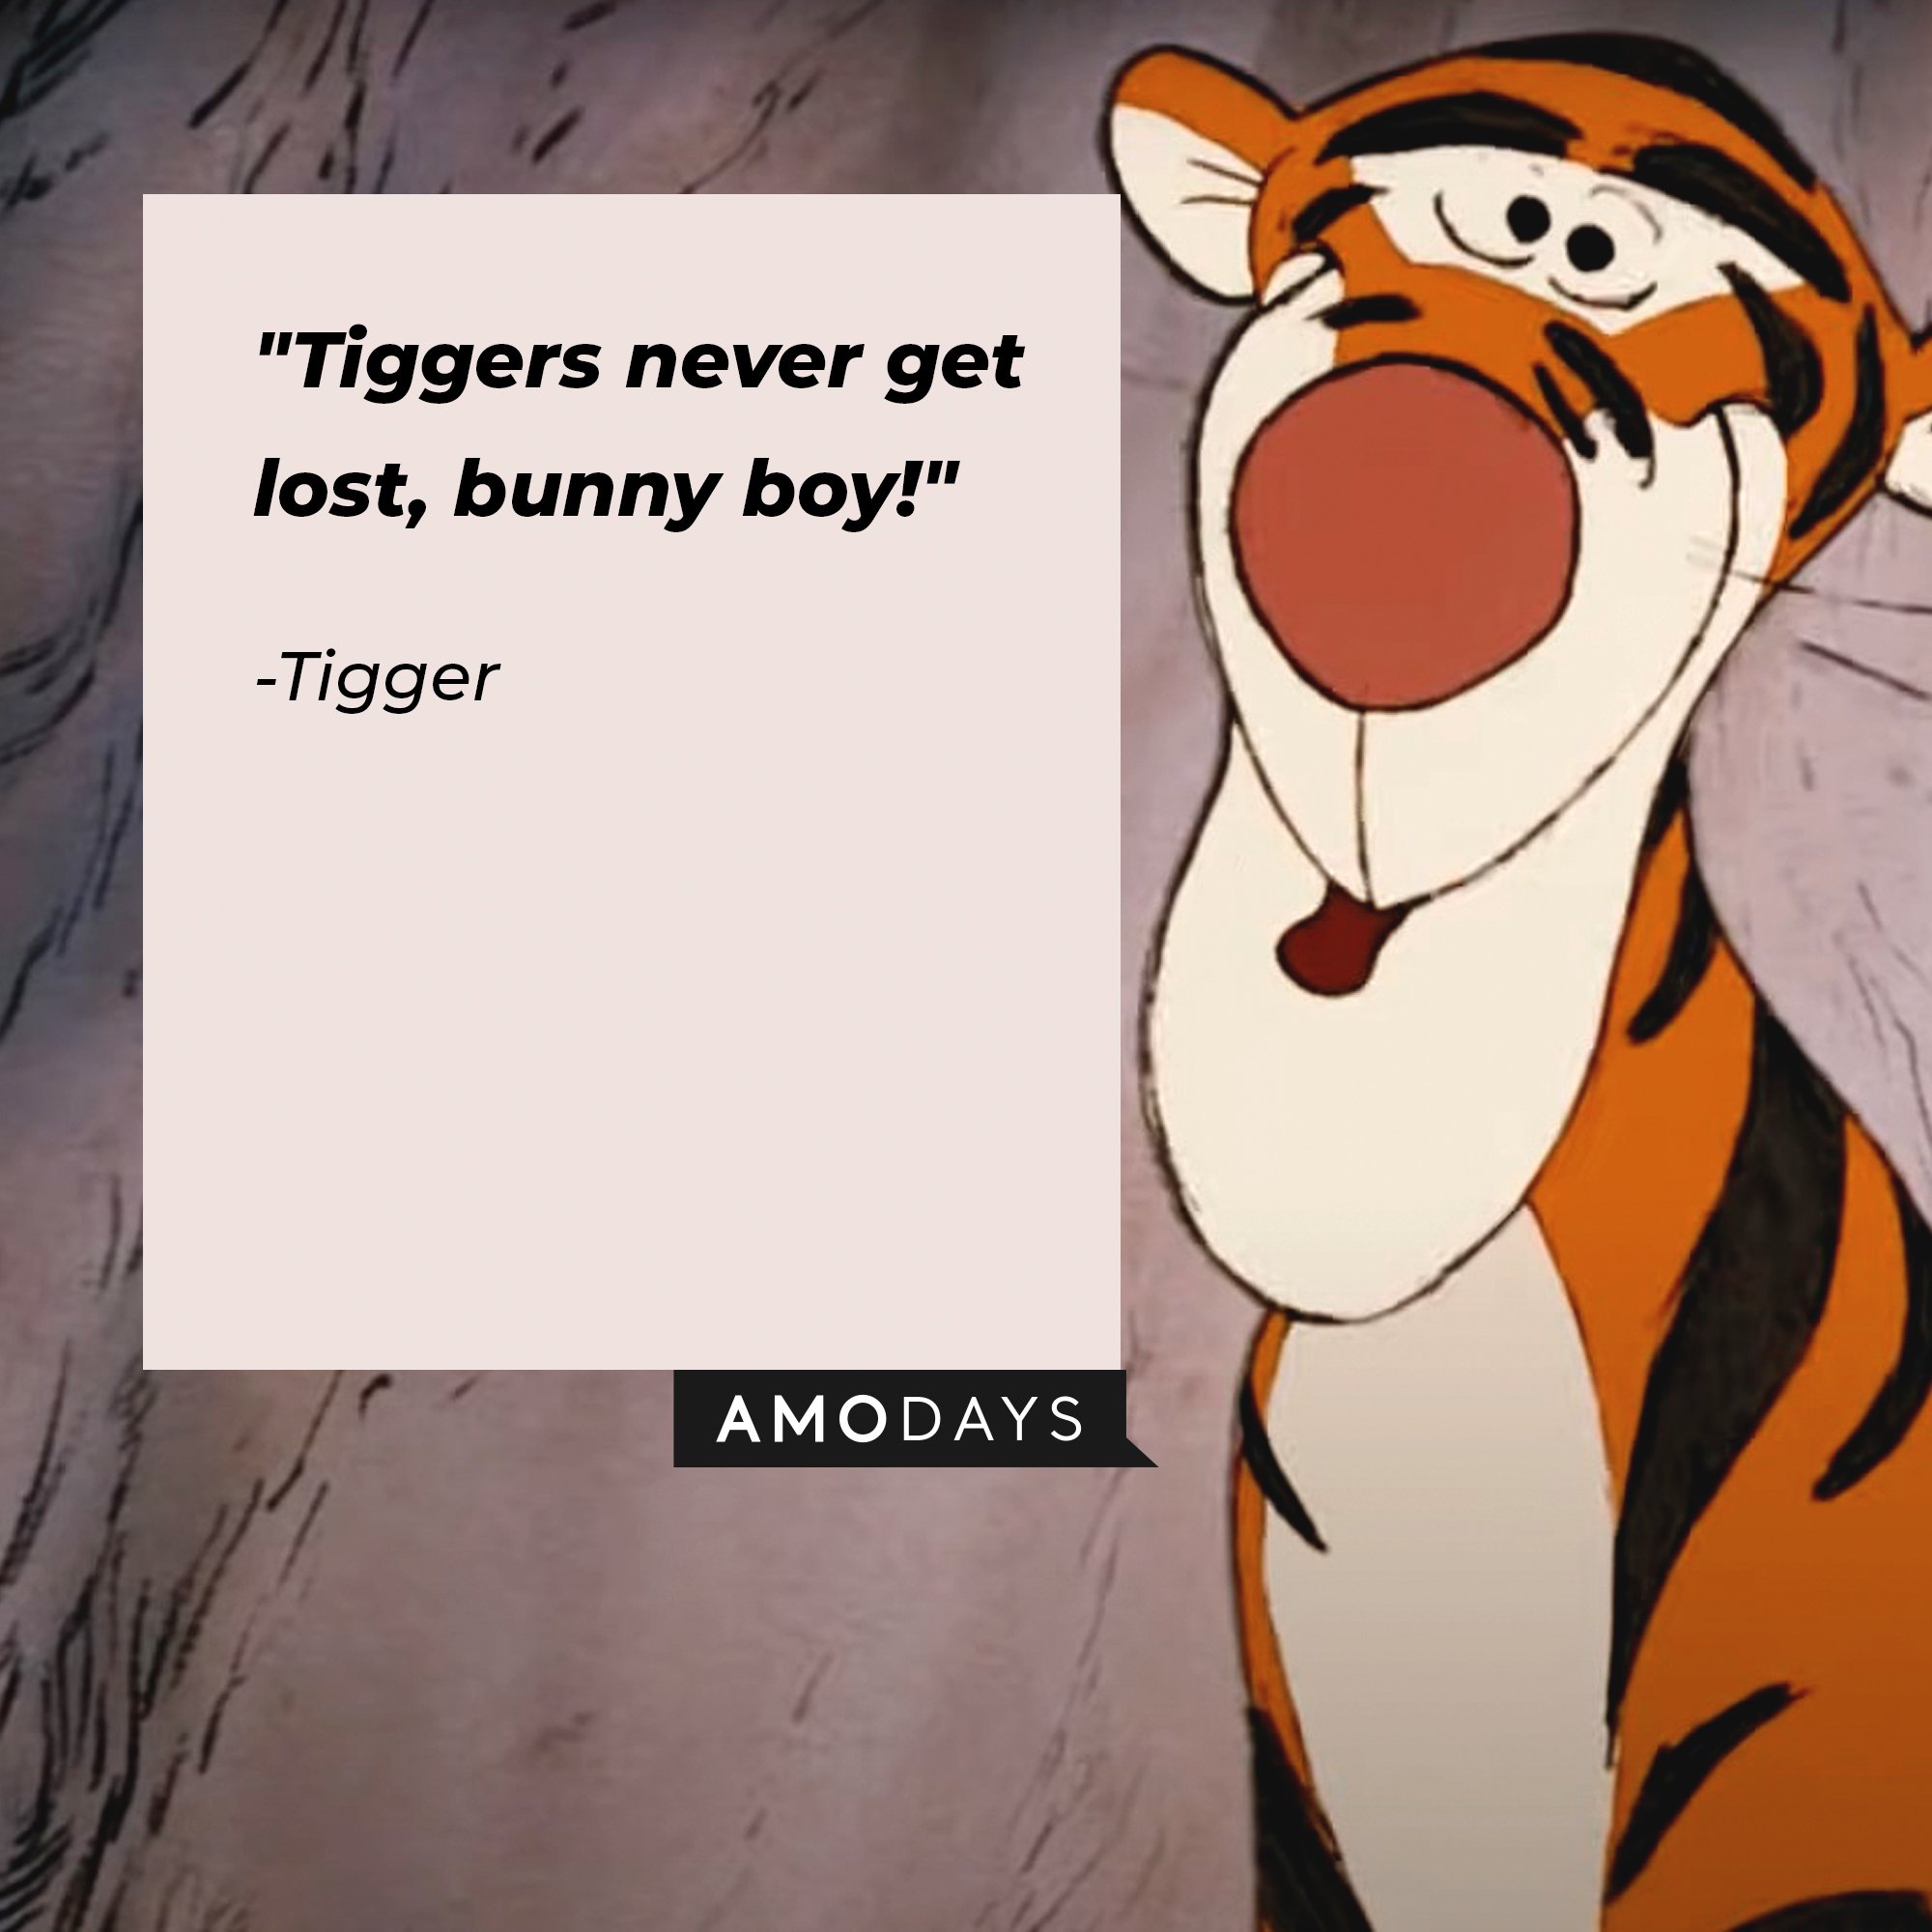 Tigger's quote: "Tiggers never get lost, bunny boy!" │ Image: AmoDays